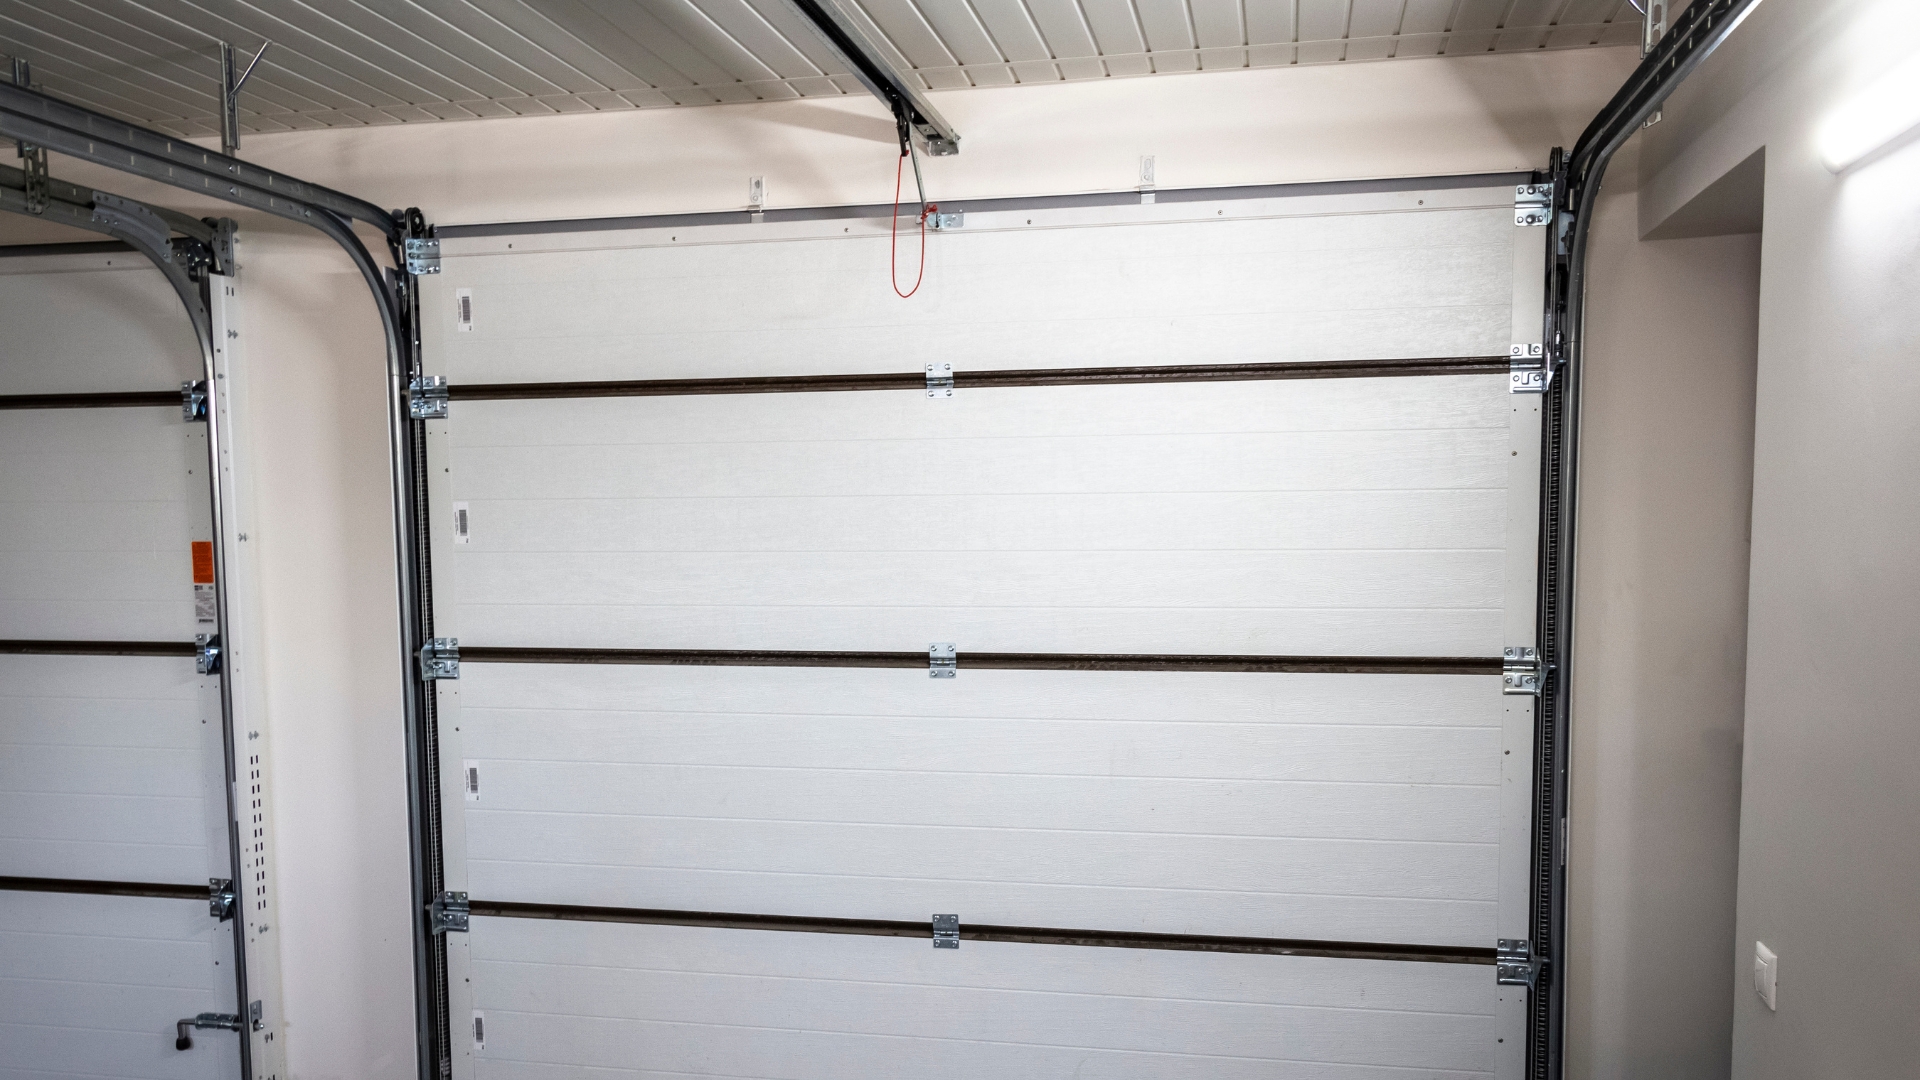 A high-lift garage door